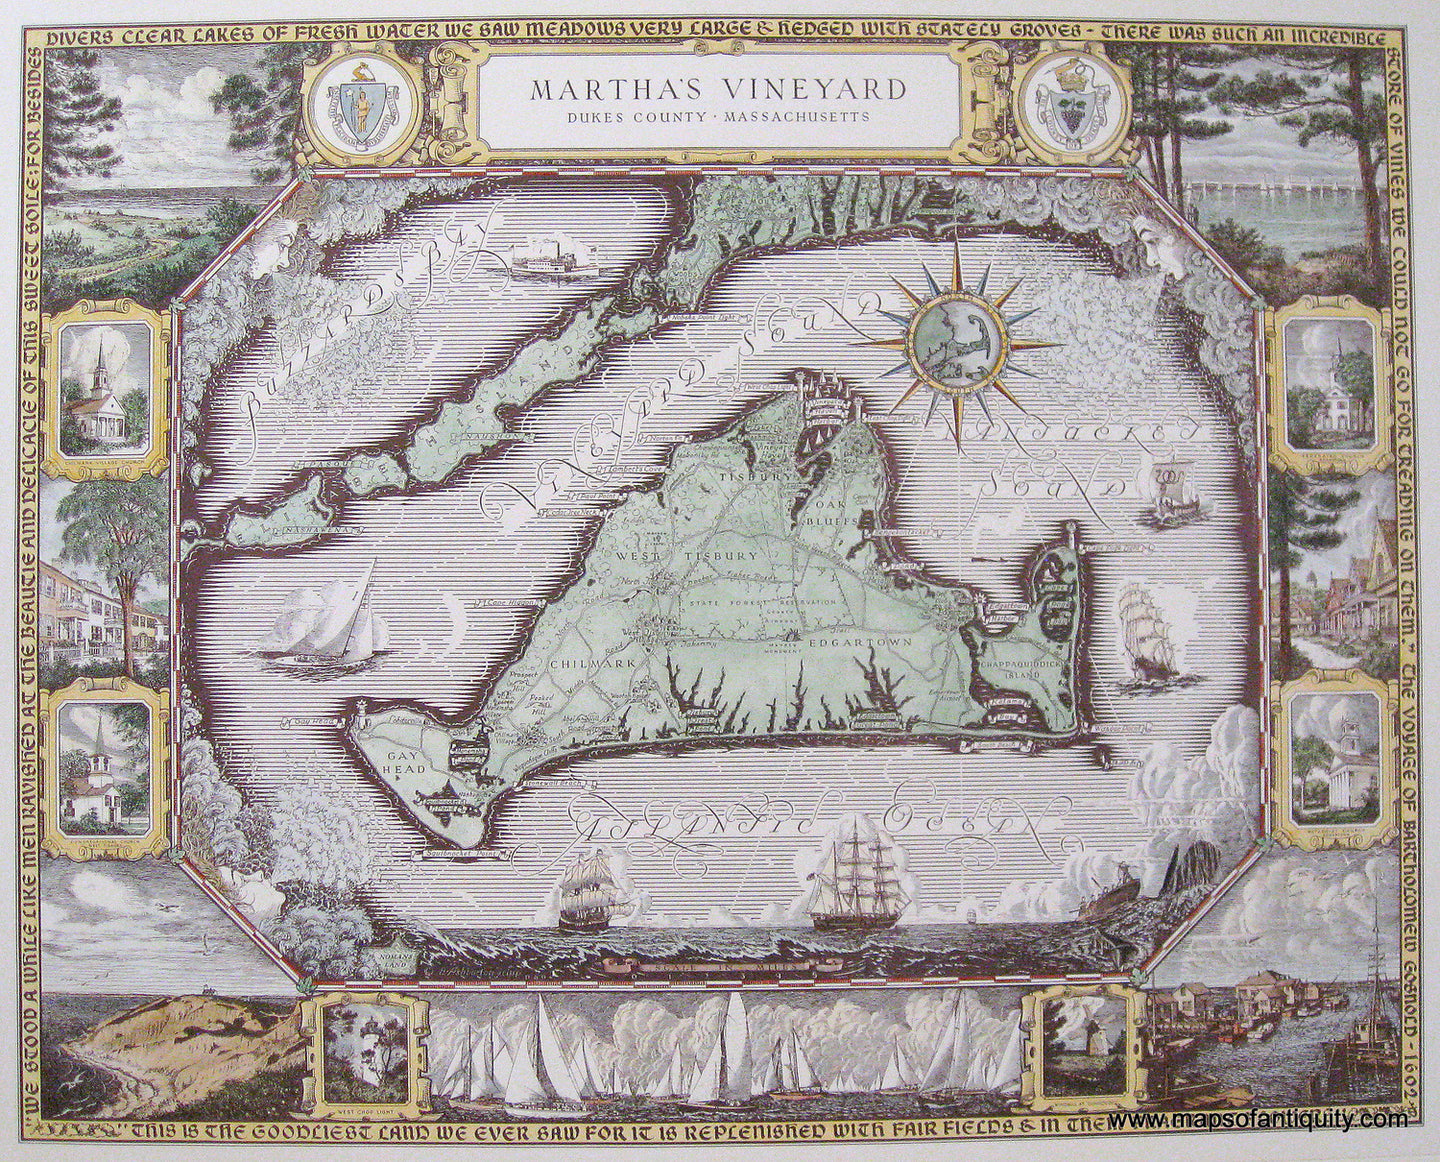 Antique-Hand-Colored-Map-Martha's-Vineyard-Duke's-County-Massachusetts-**********-Massachusetts-Cape-Cod-and-Islands-c.-1930s-Ashburton-Tripp-Maps-Of-Antiquity